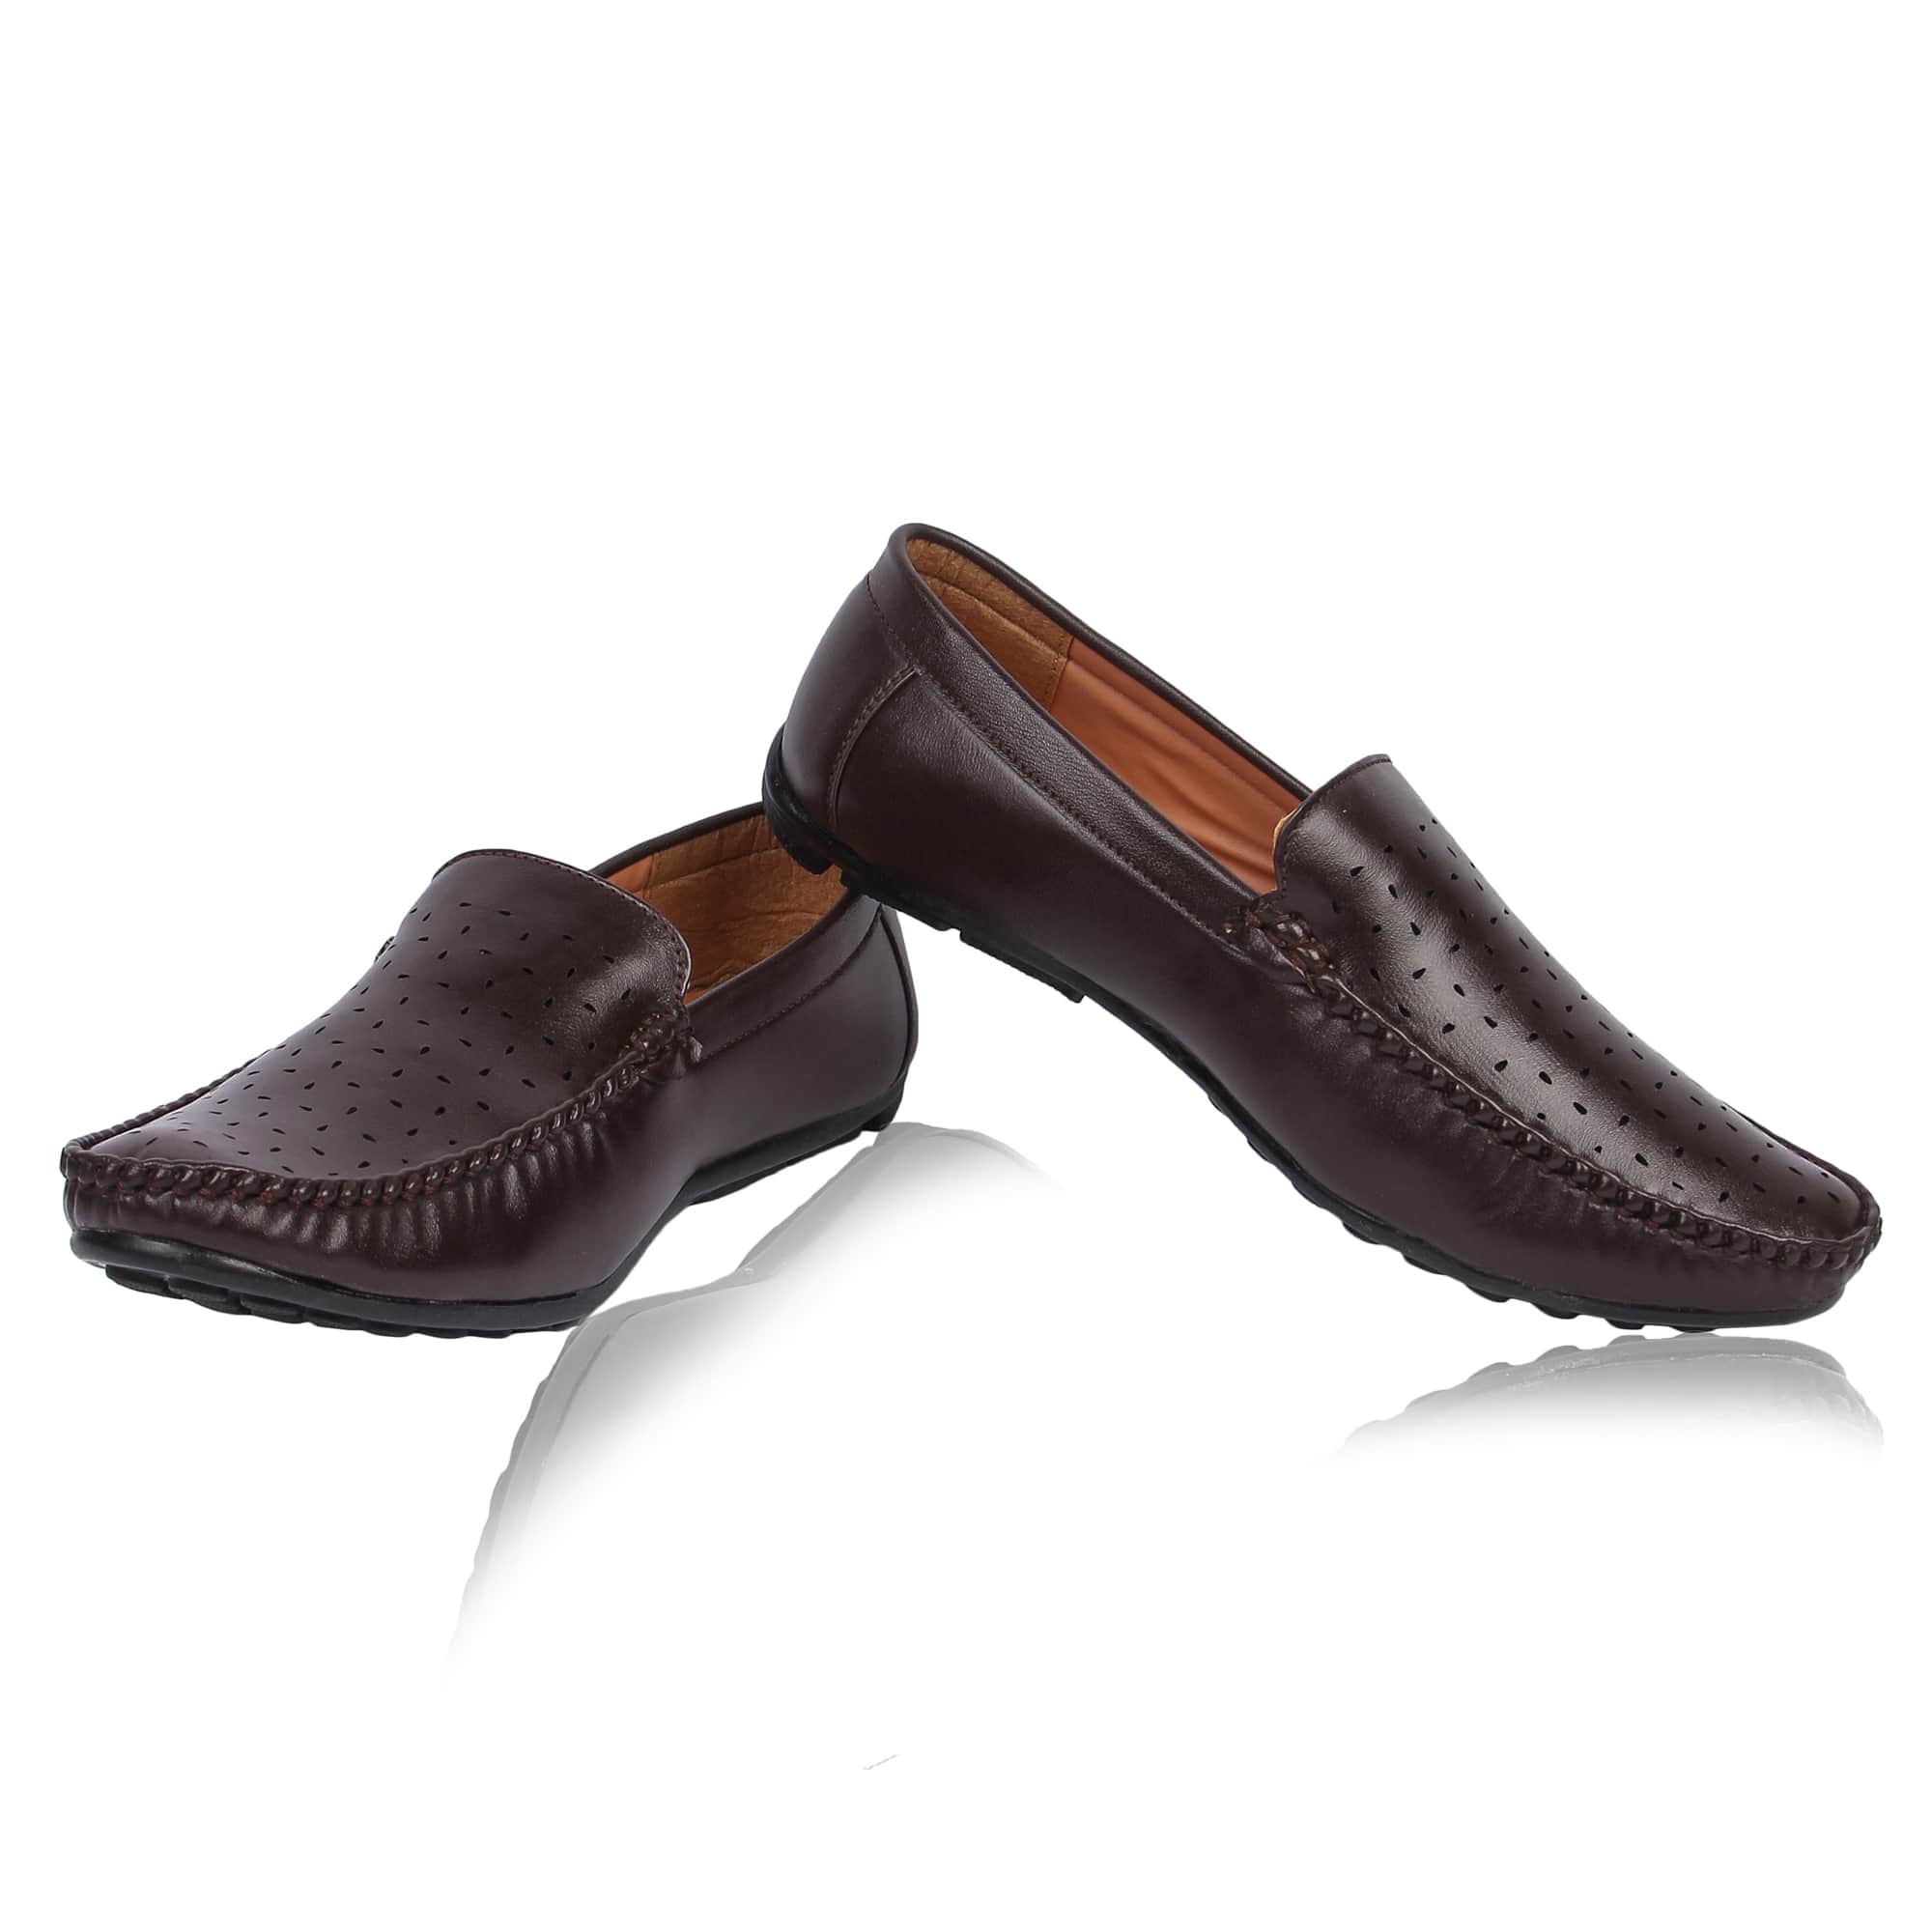 IMG_0062-min | Online Store for Men Footwear in India